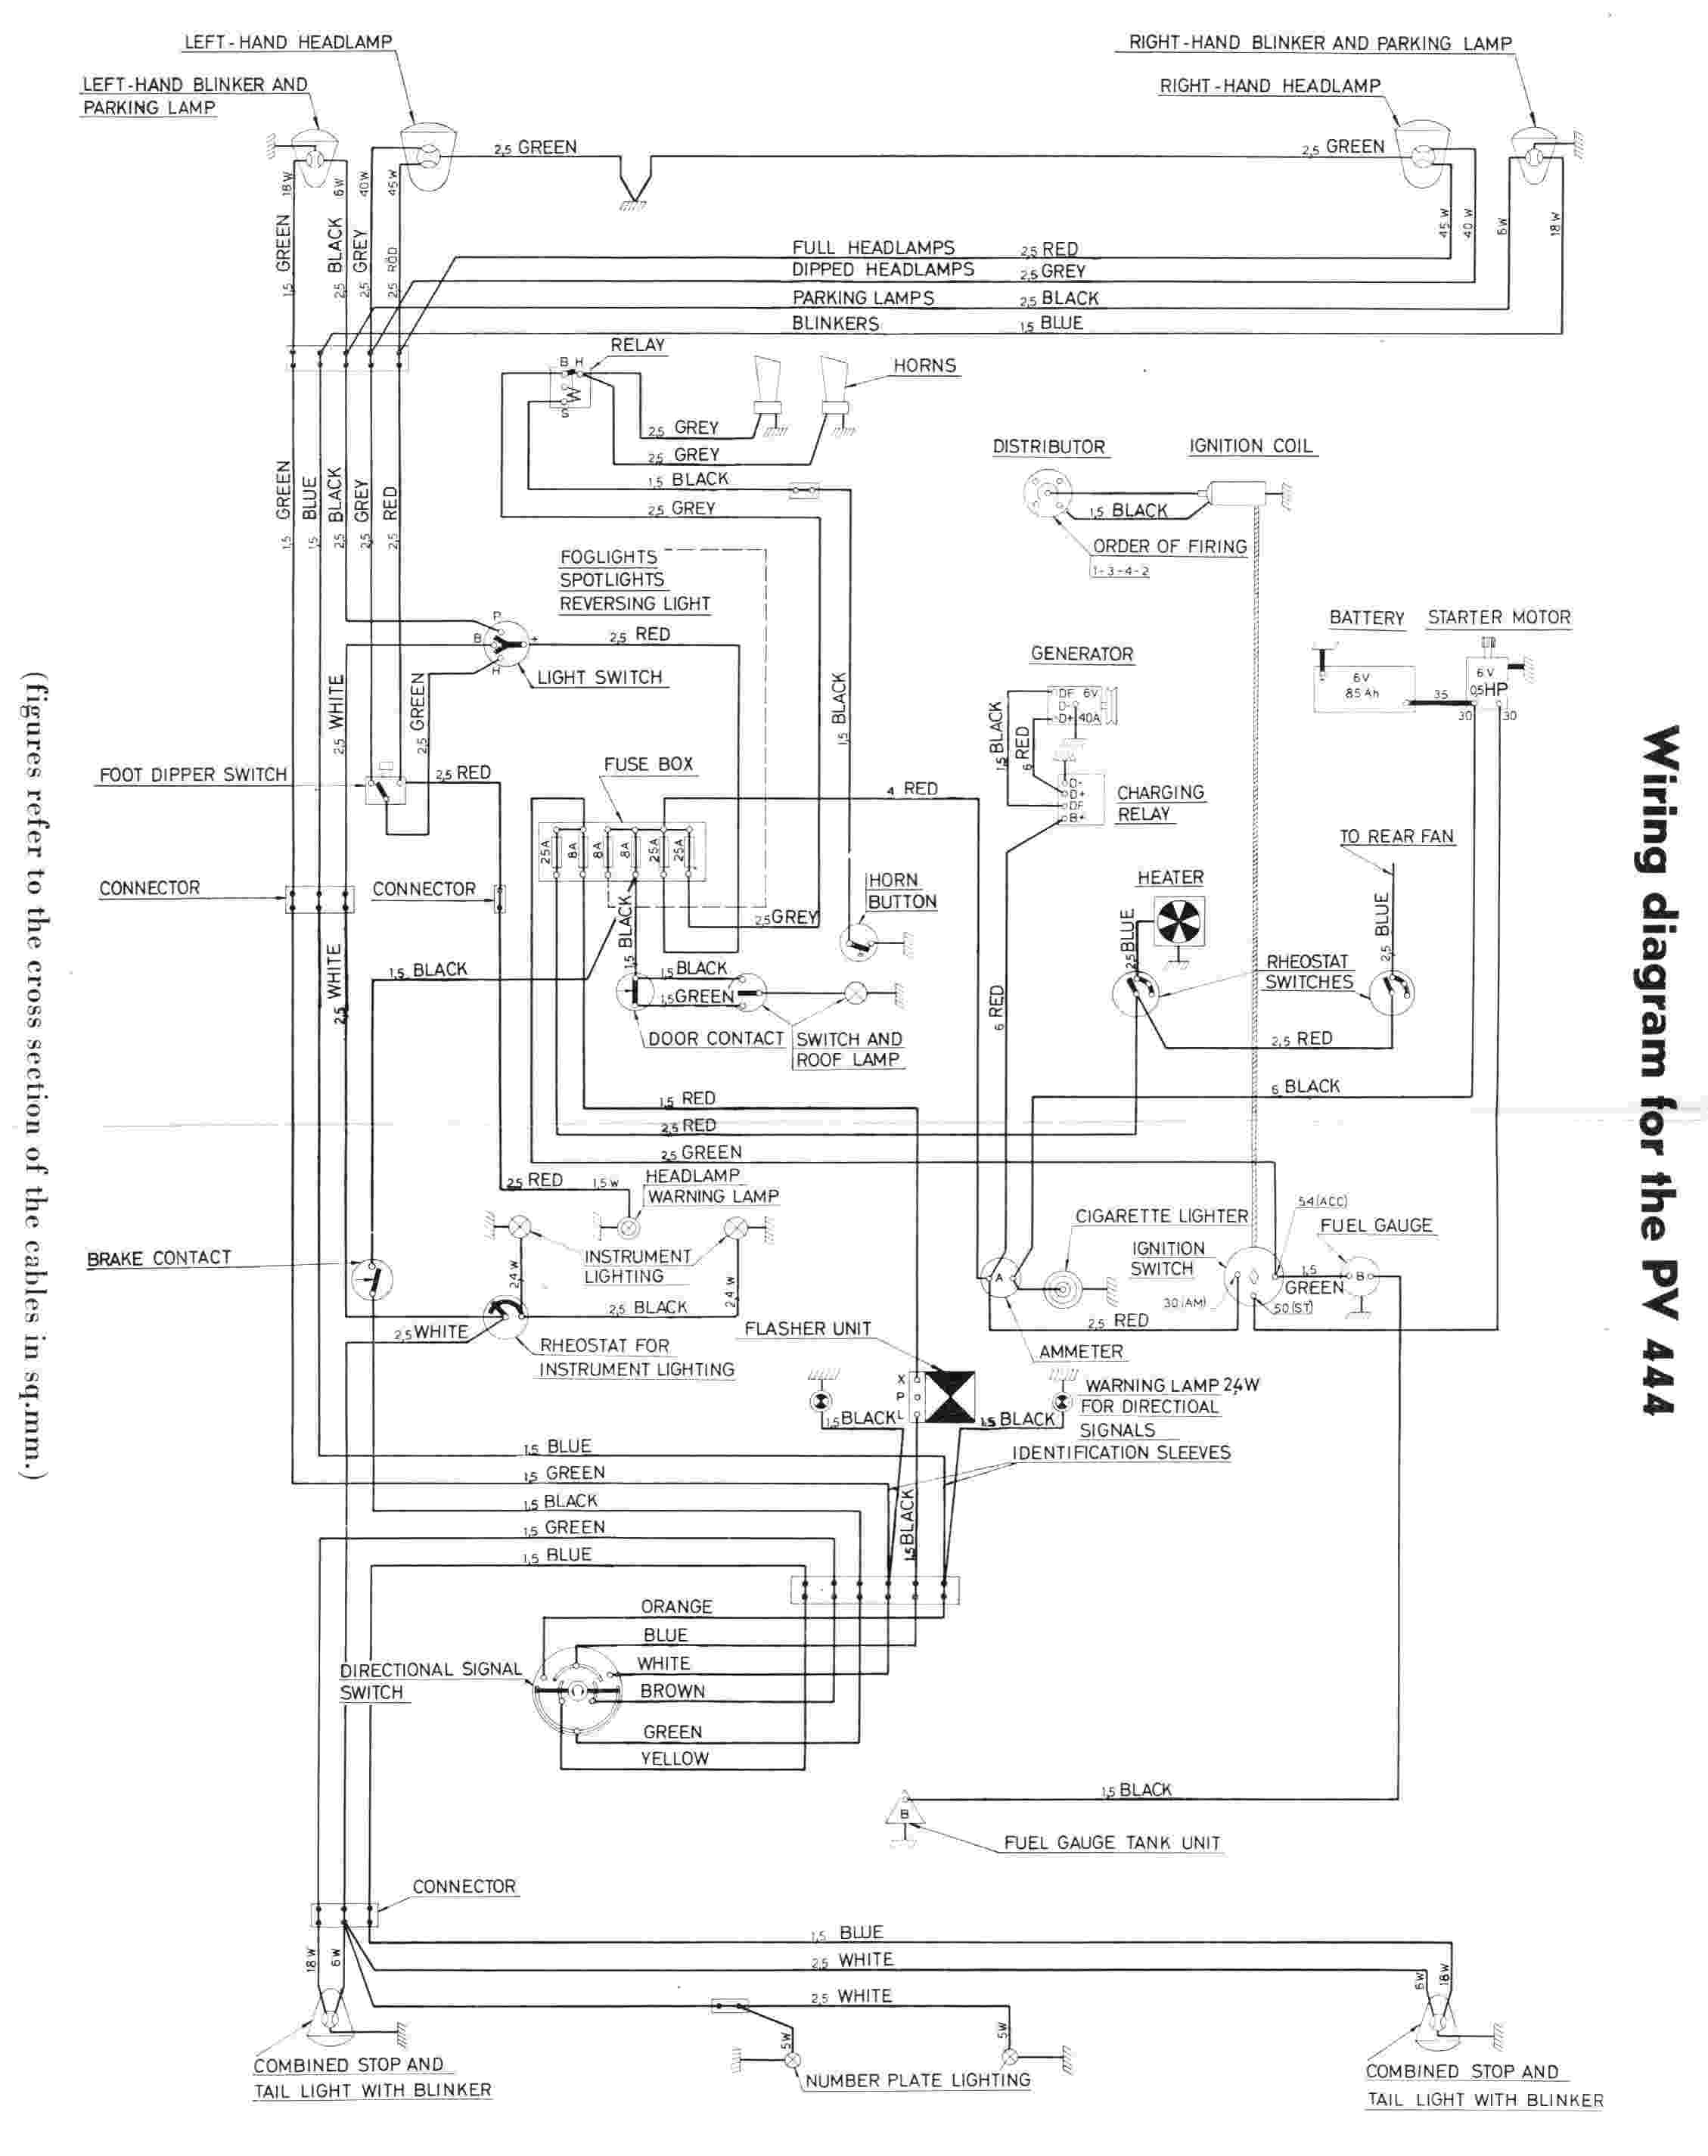 VOLVO - Car PDF Manual, Wiring Diagram & Fault Codes DTC Volvo S60 Engine Diagram automotive-manuals.net